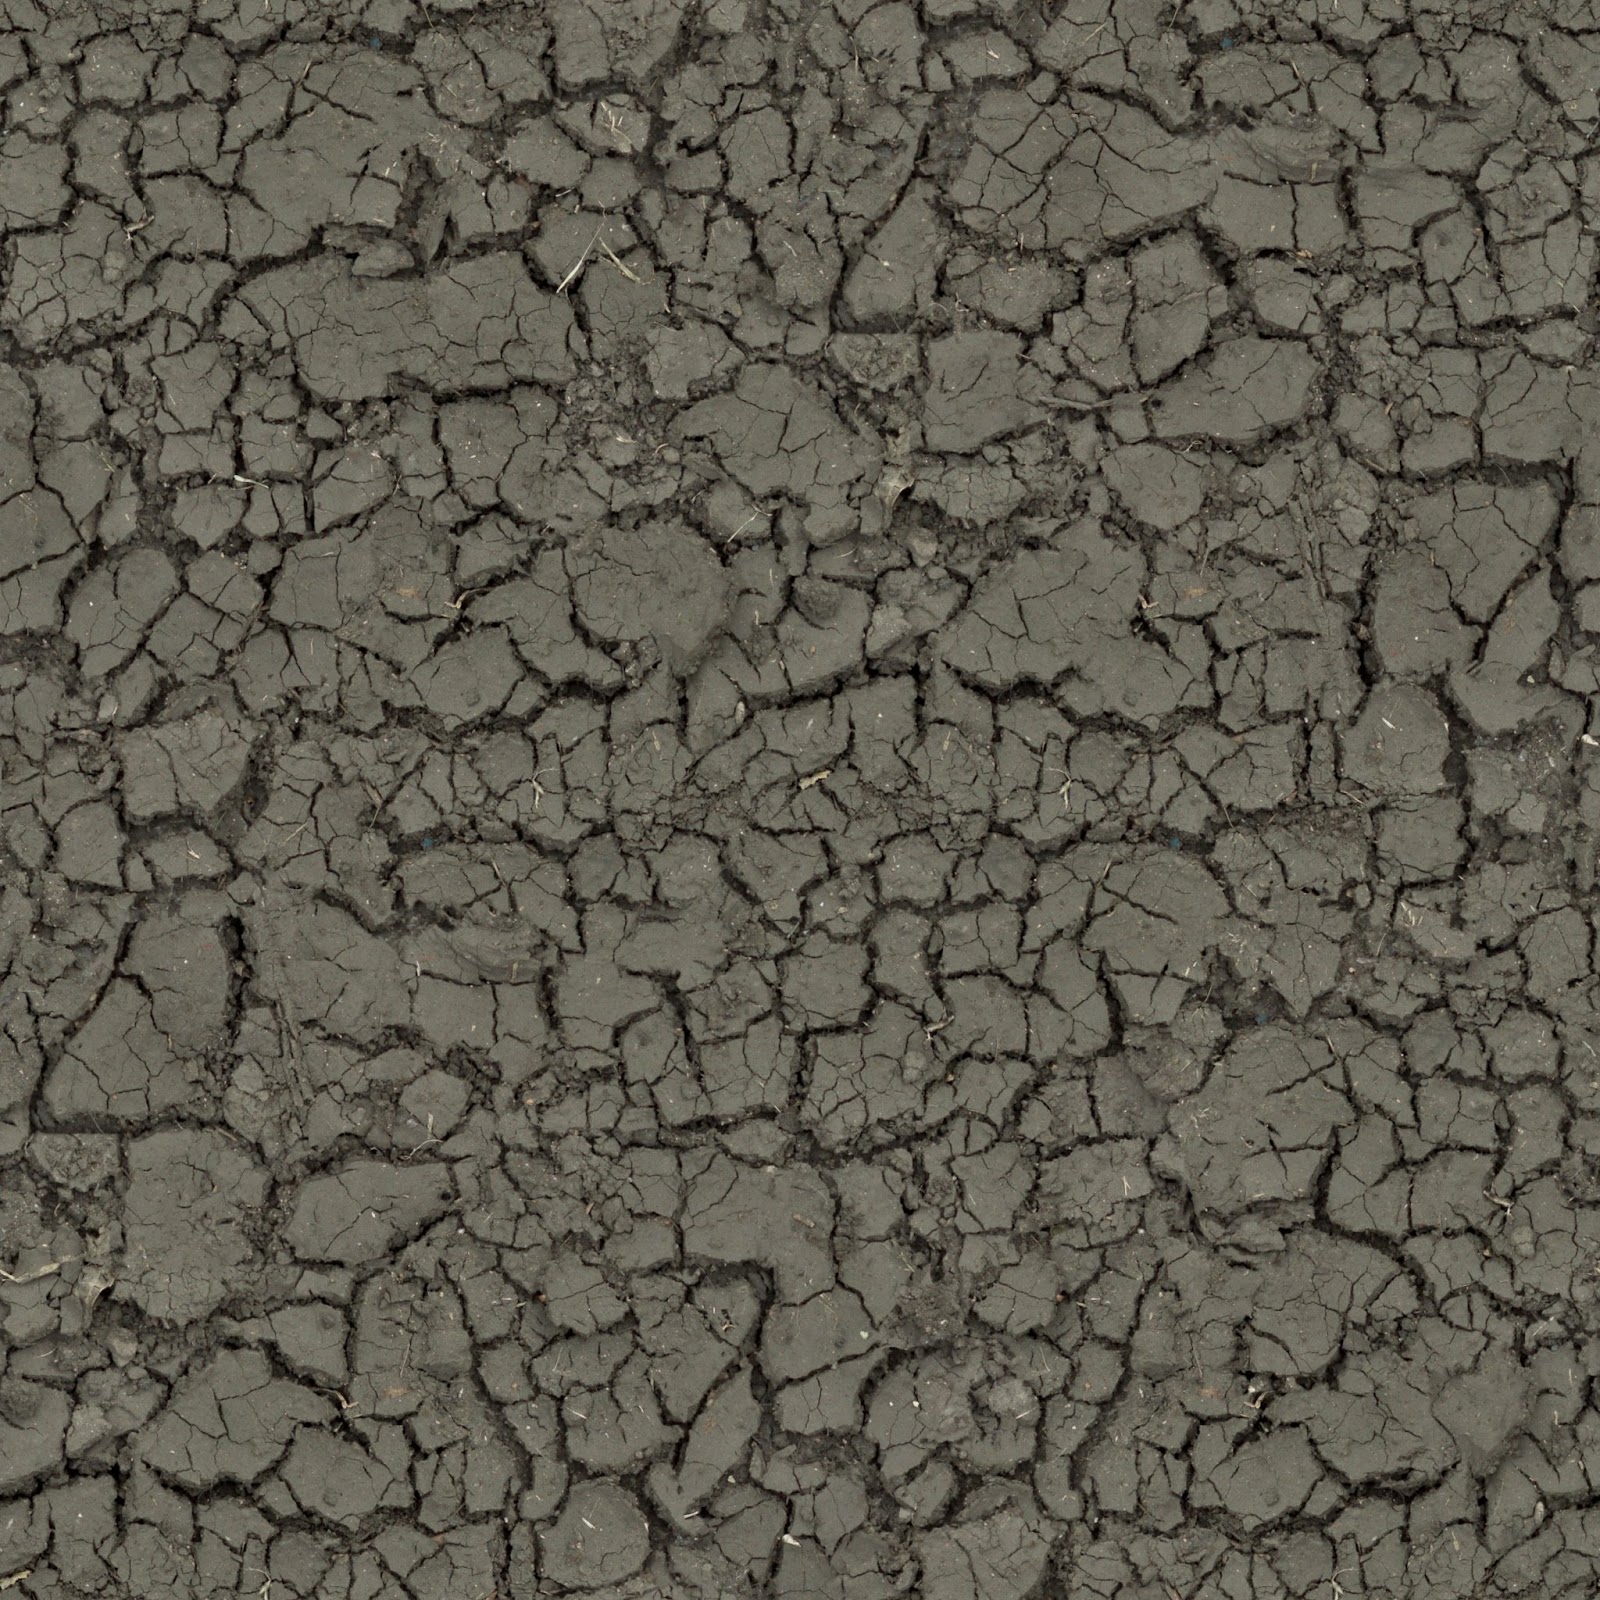 High Resolution Seamless Textures: Mud cracked dirt soil ground texture